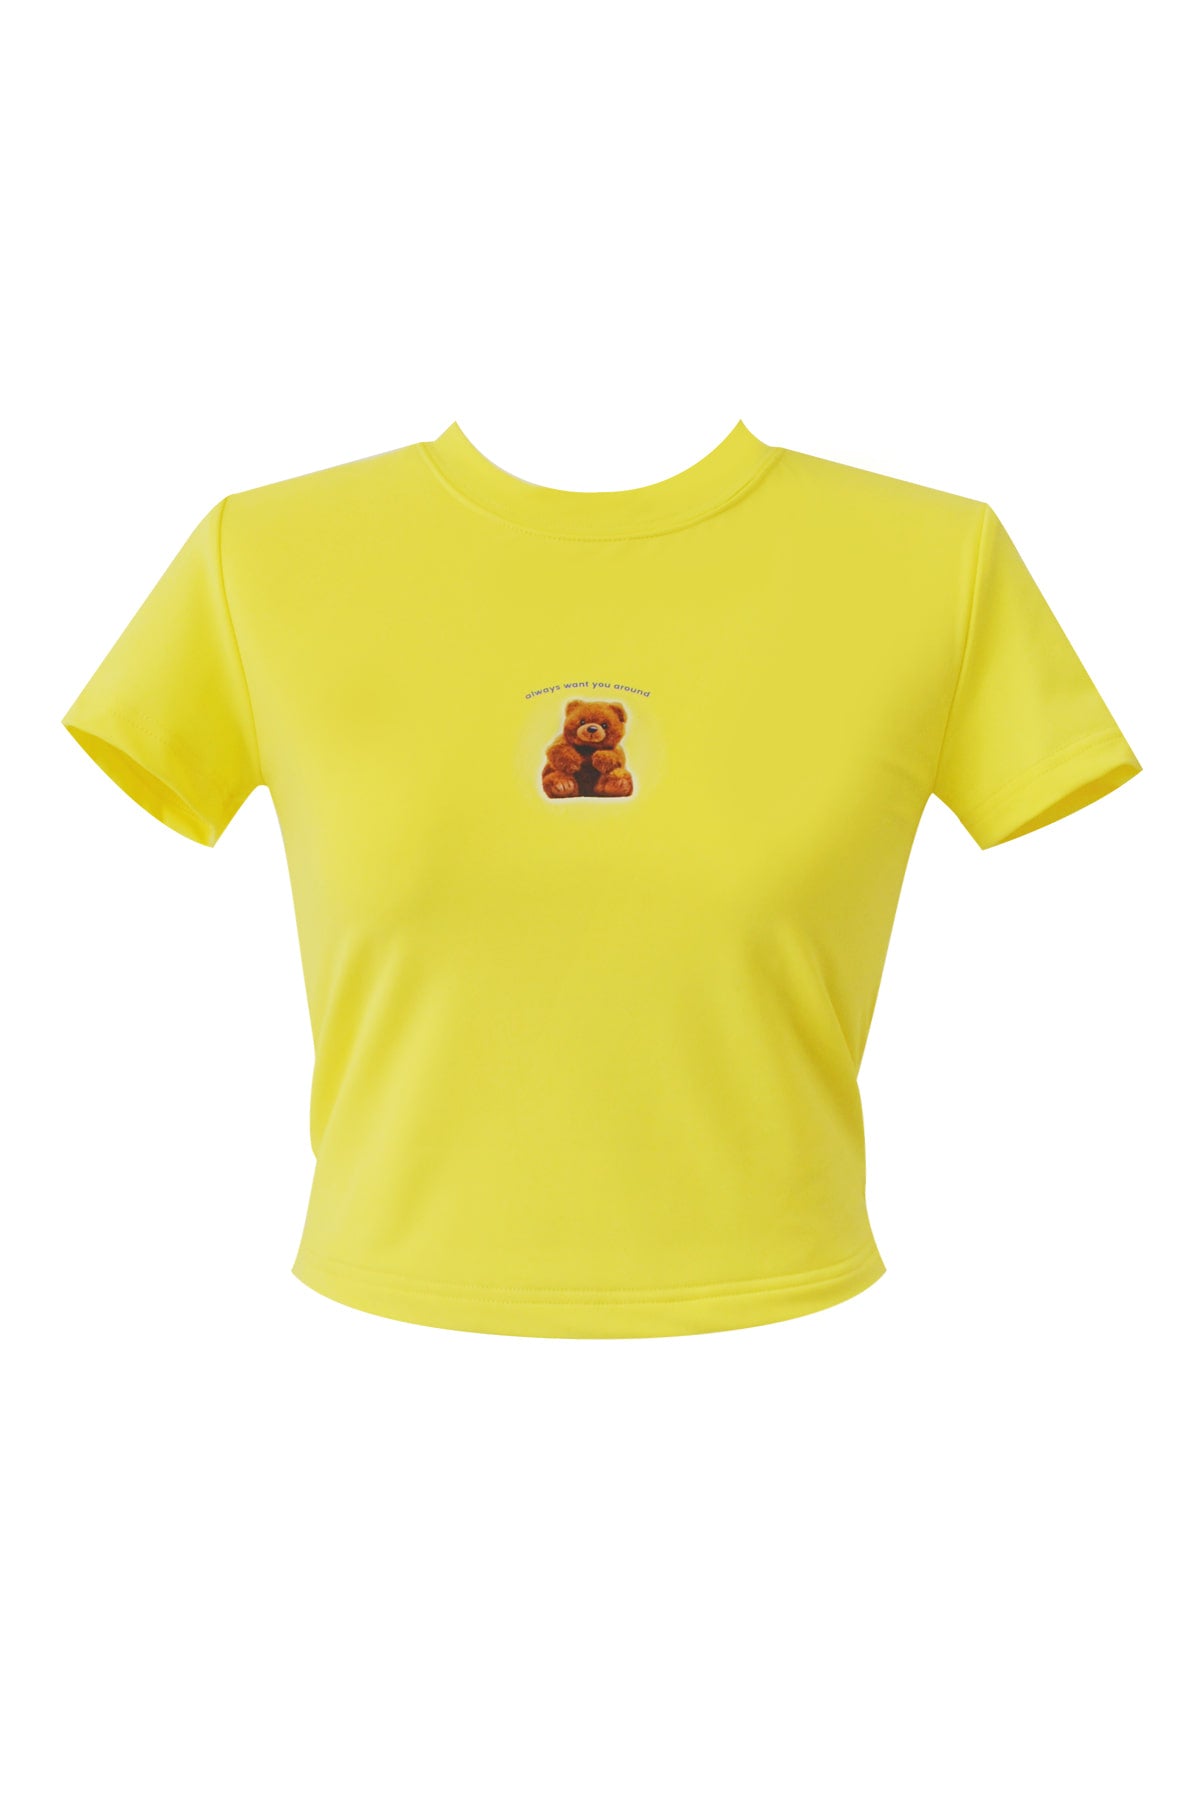 90s bear crop span short sleeve t-shirts (yellow)